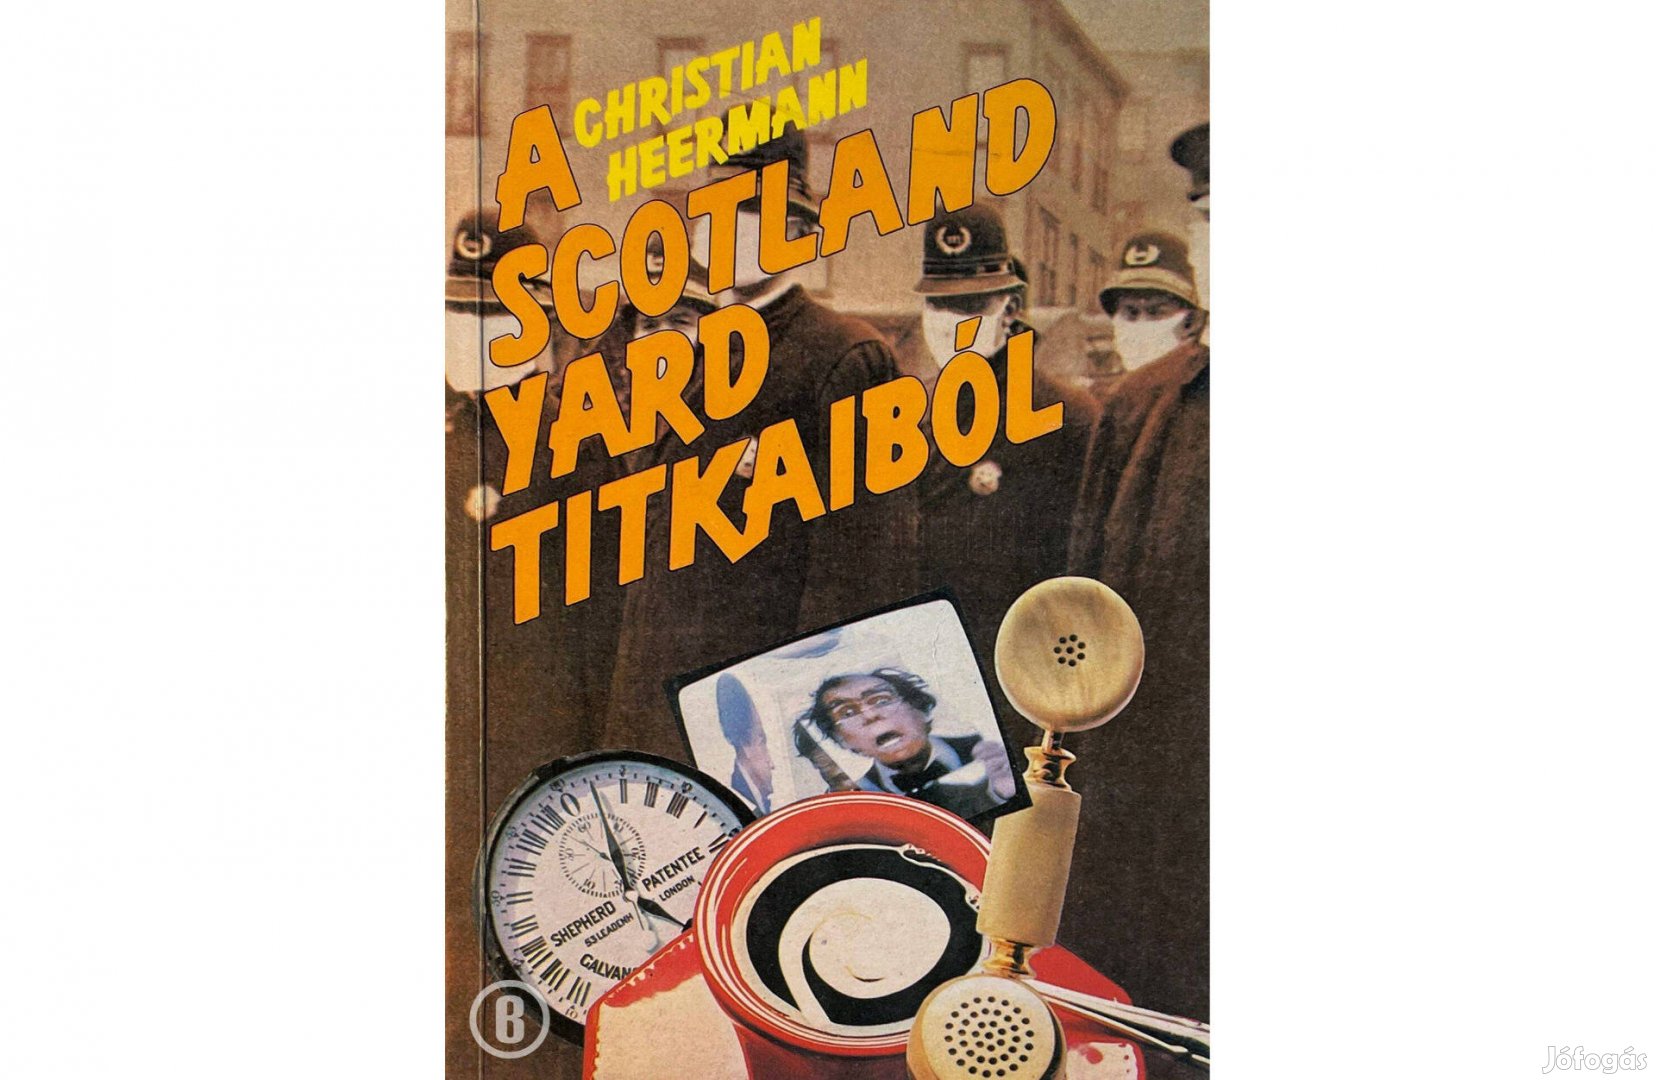 Christian Heermann: A Scotland Yard titkaiból